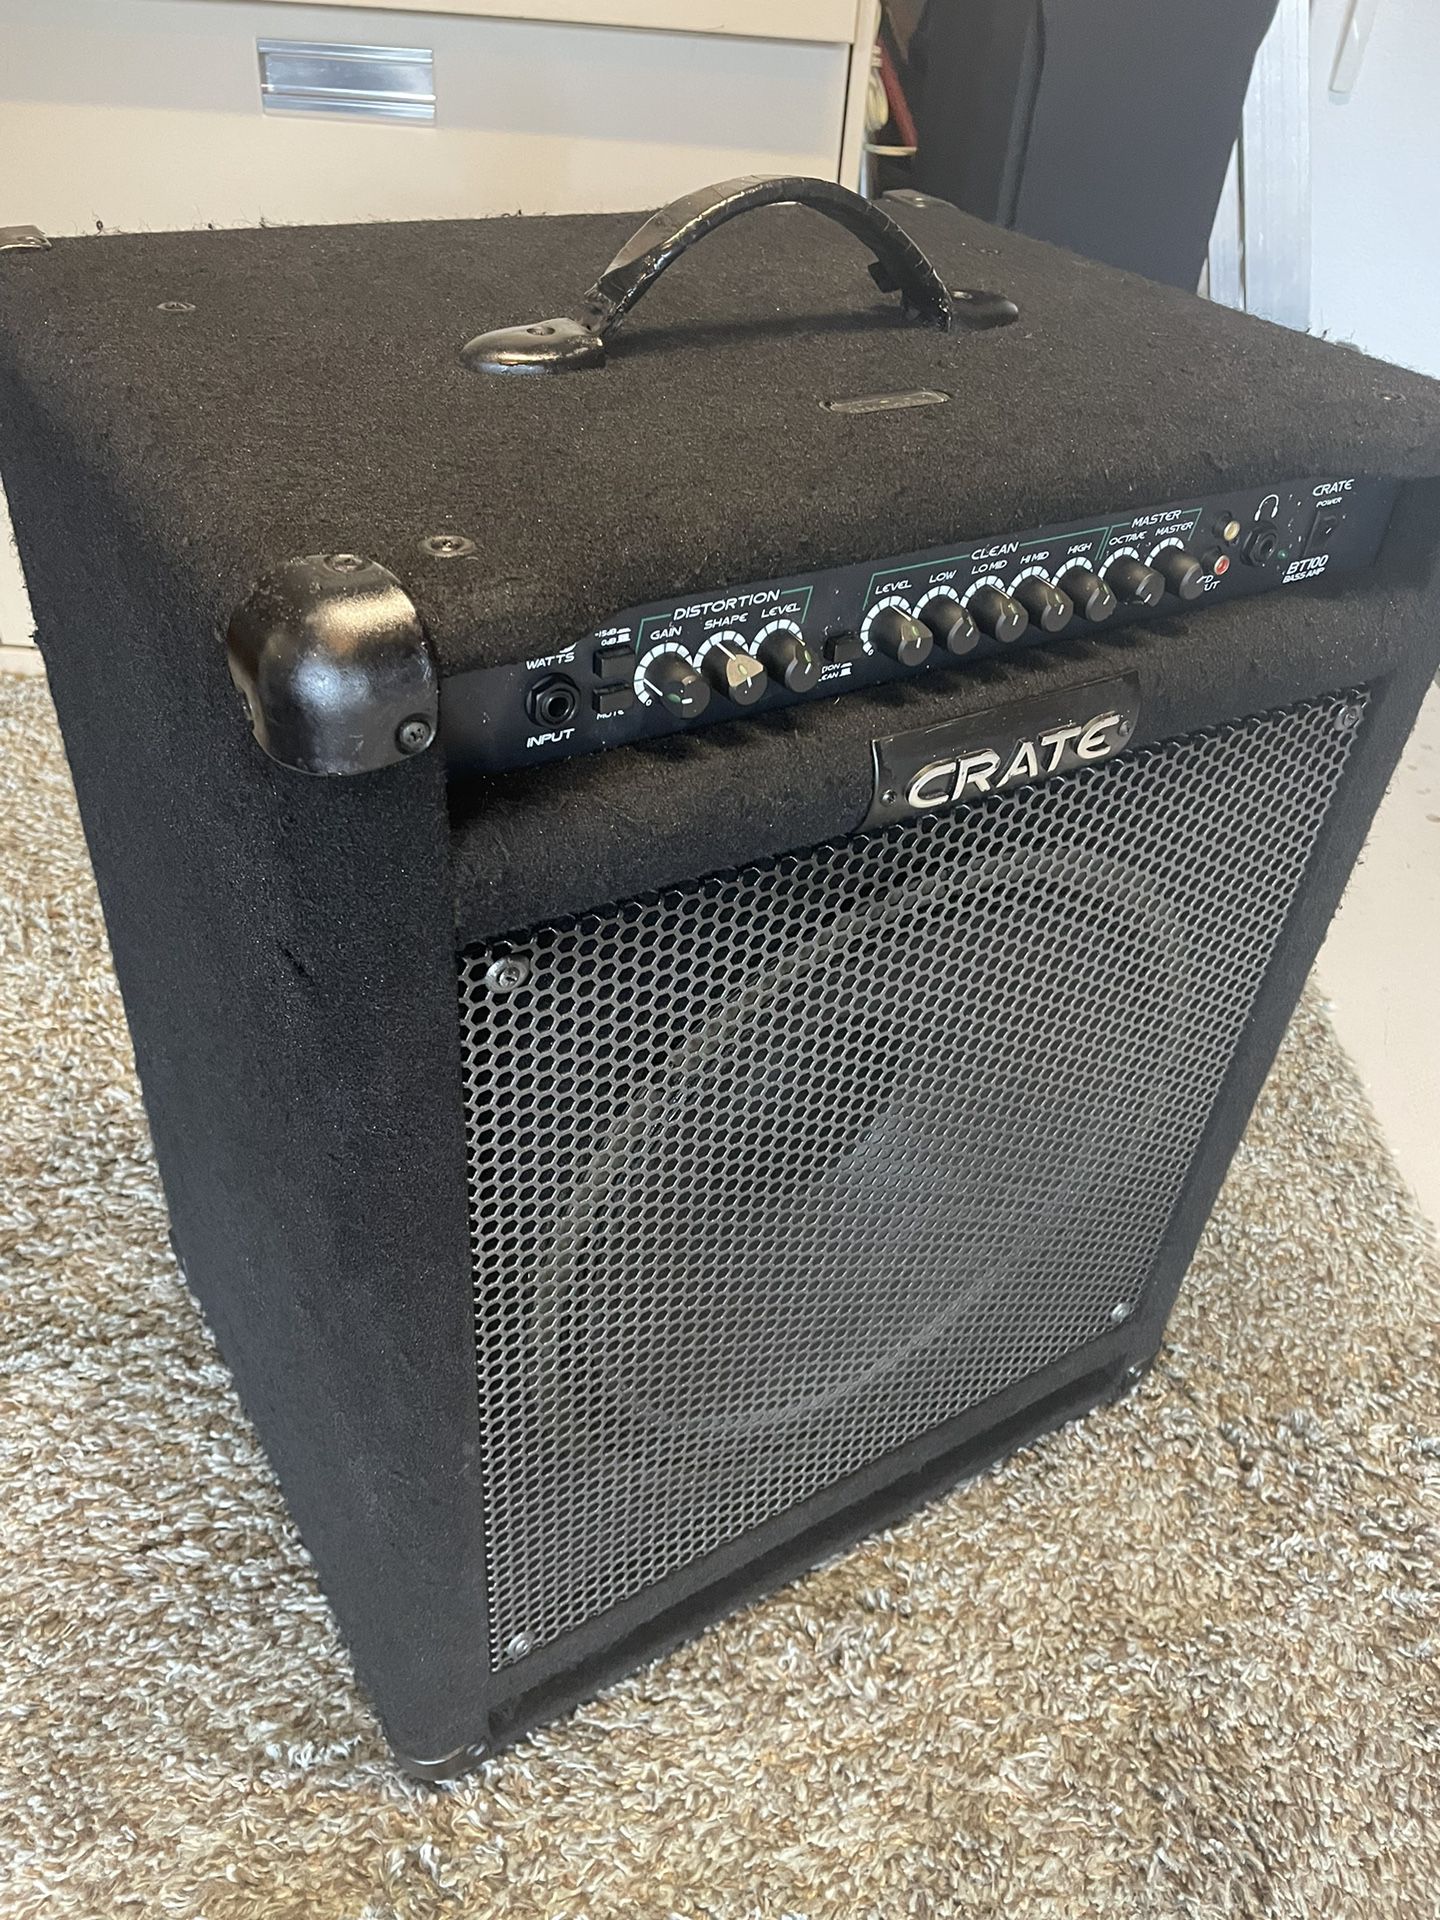 Crate Amplifier BT100 1-15”, 100 watts for Bass Guitar, Keyboard, or DJ loud Speaker. FIRM